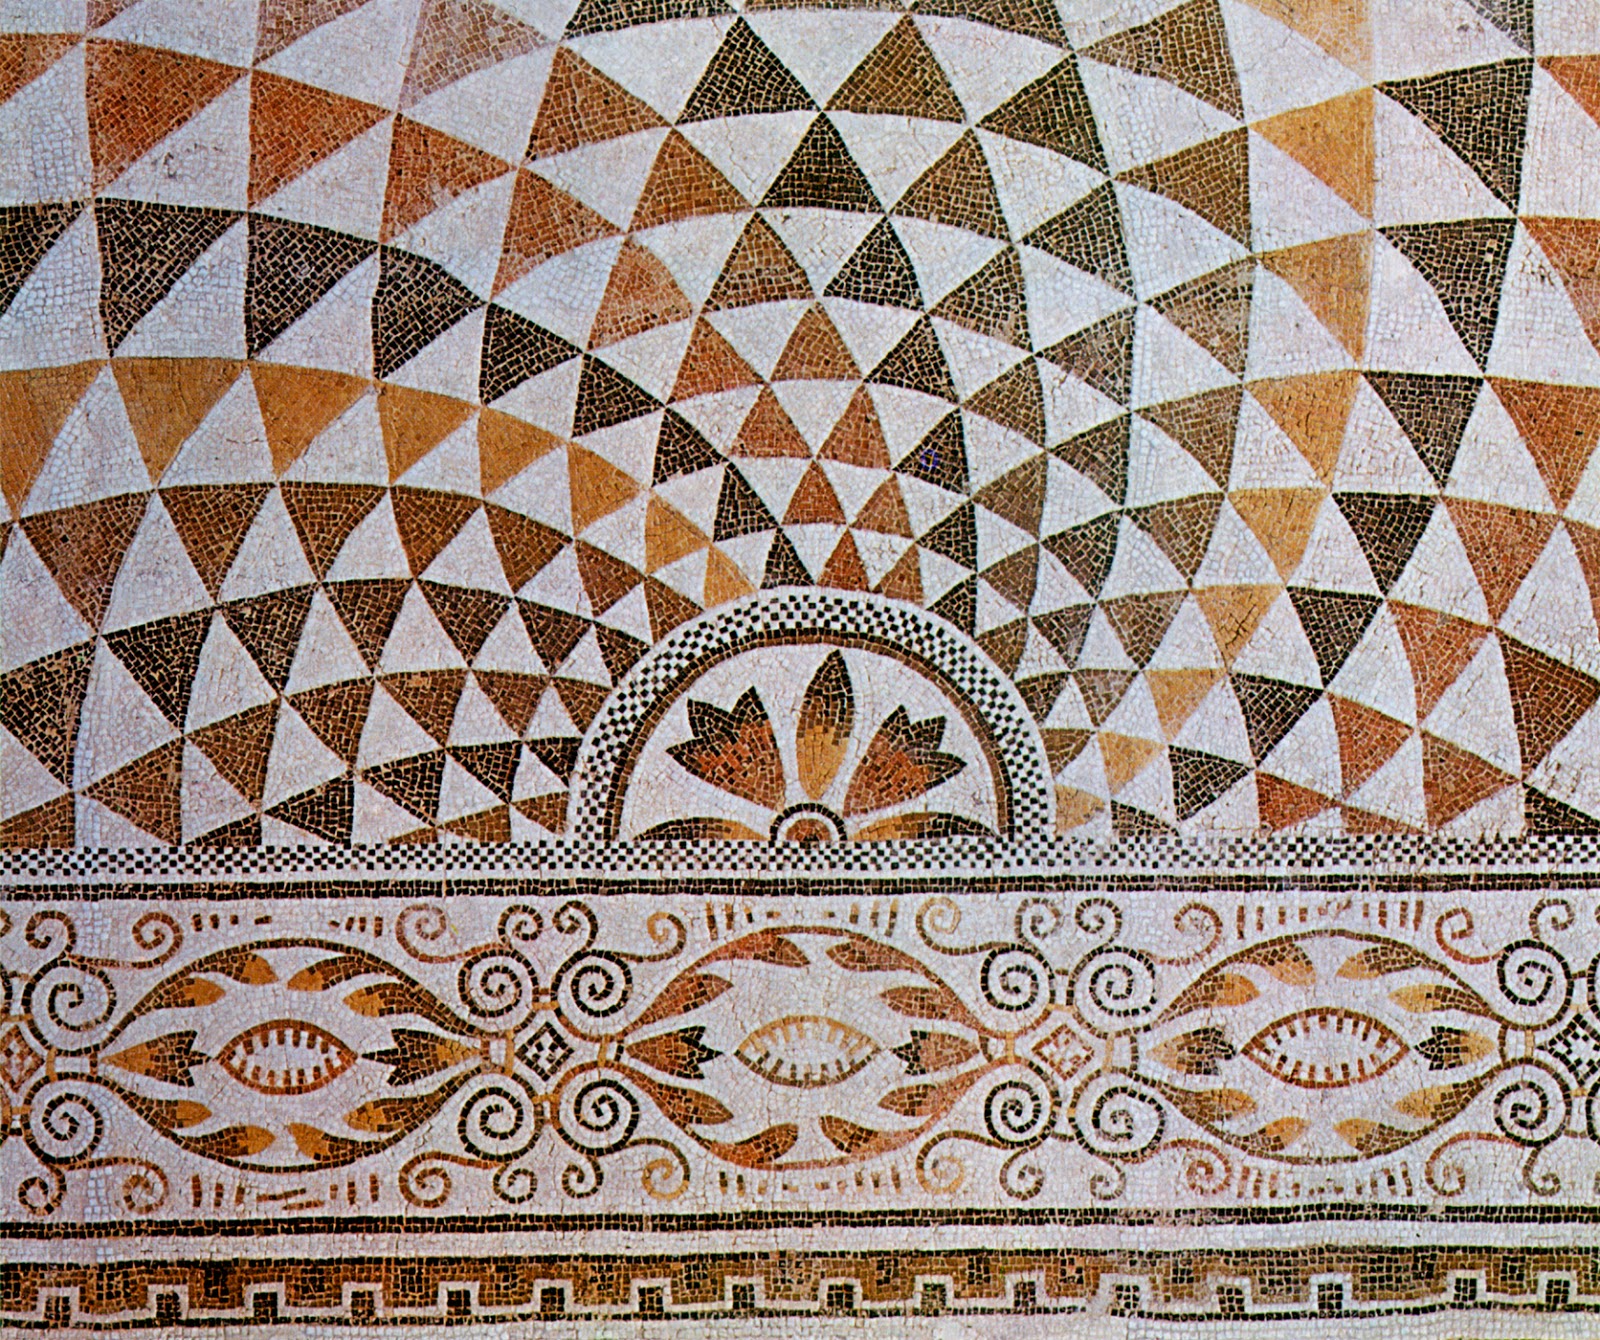 CHAUDRON: Roman Mosaics of Tunisia